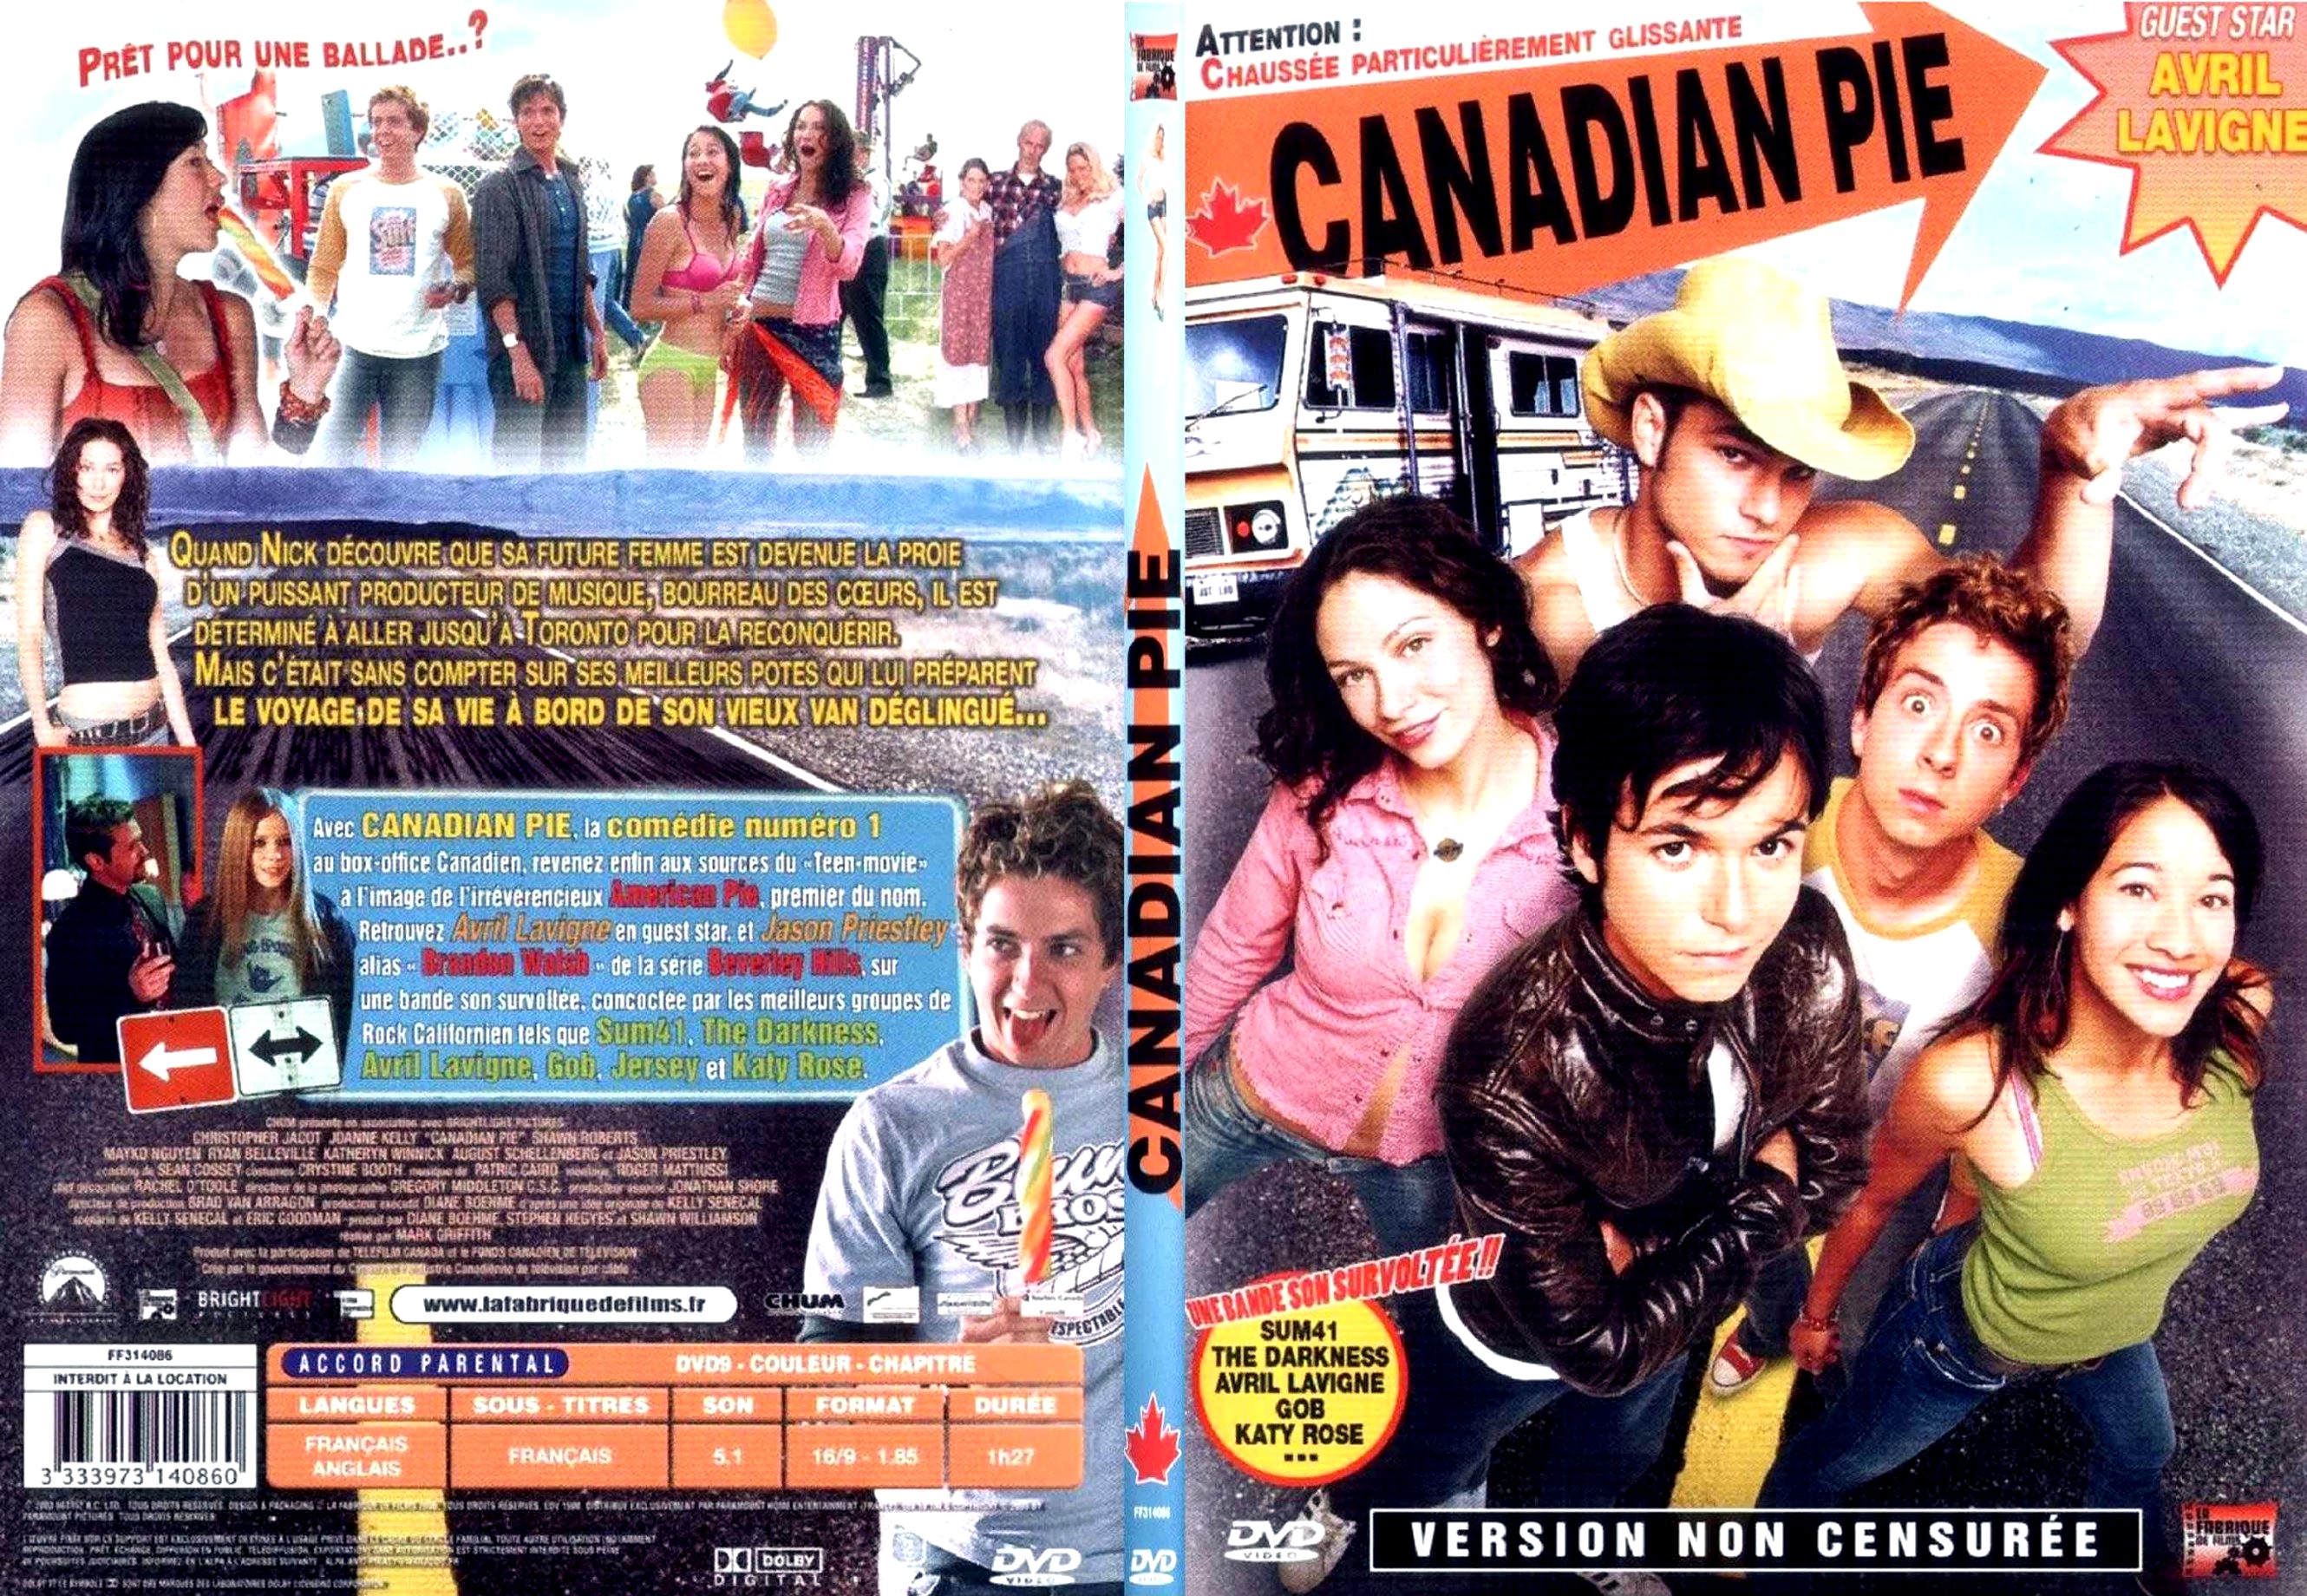 Jaquette DVD Canadian pie - SLIM